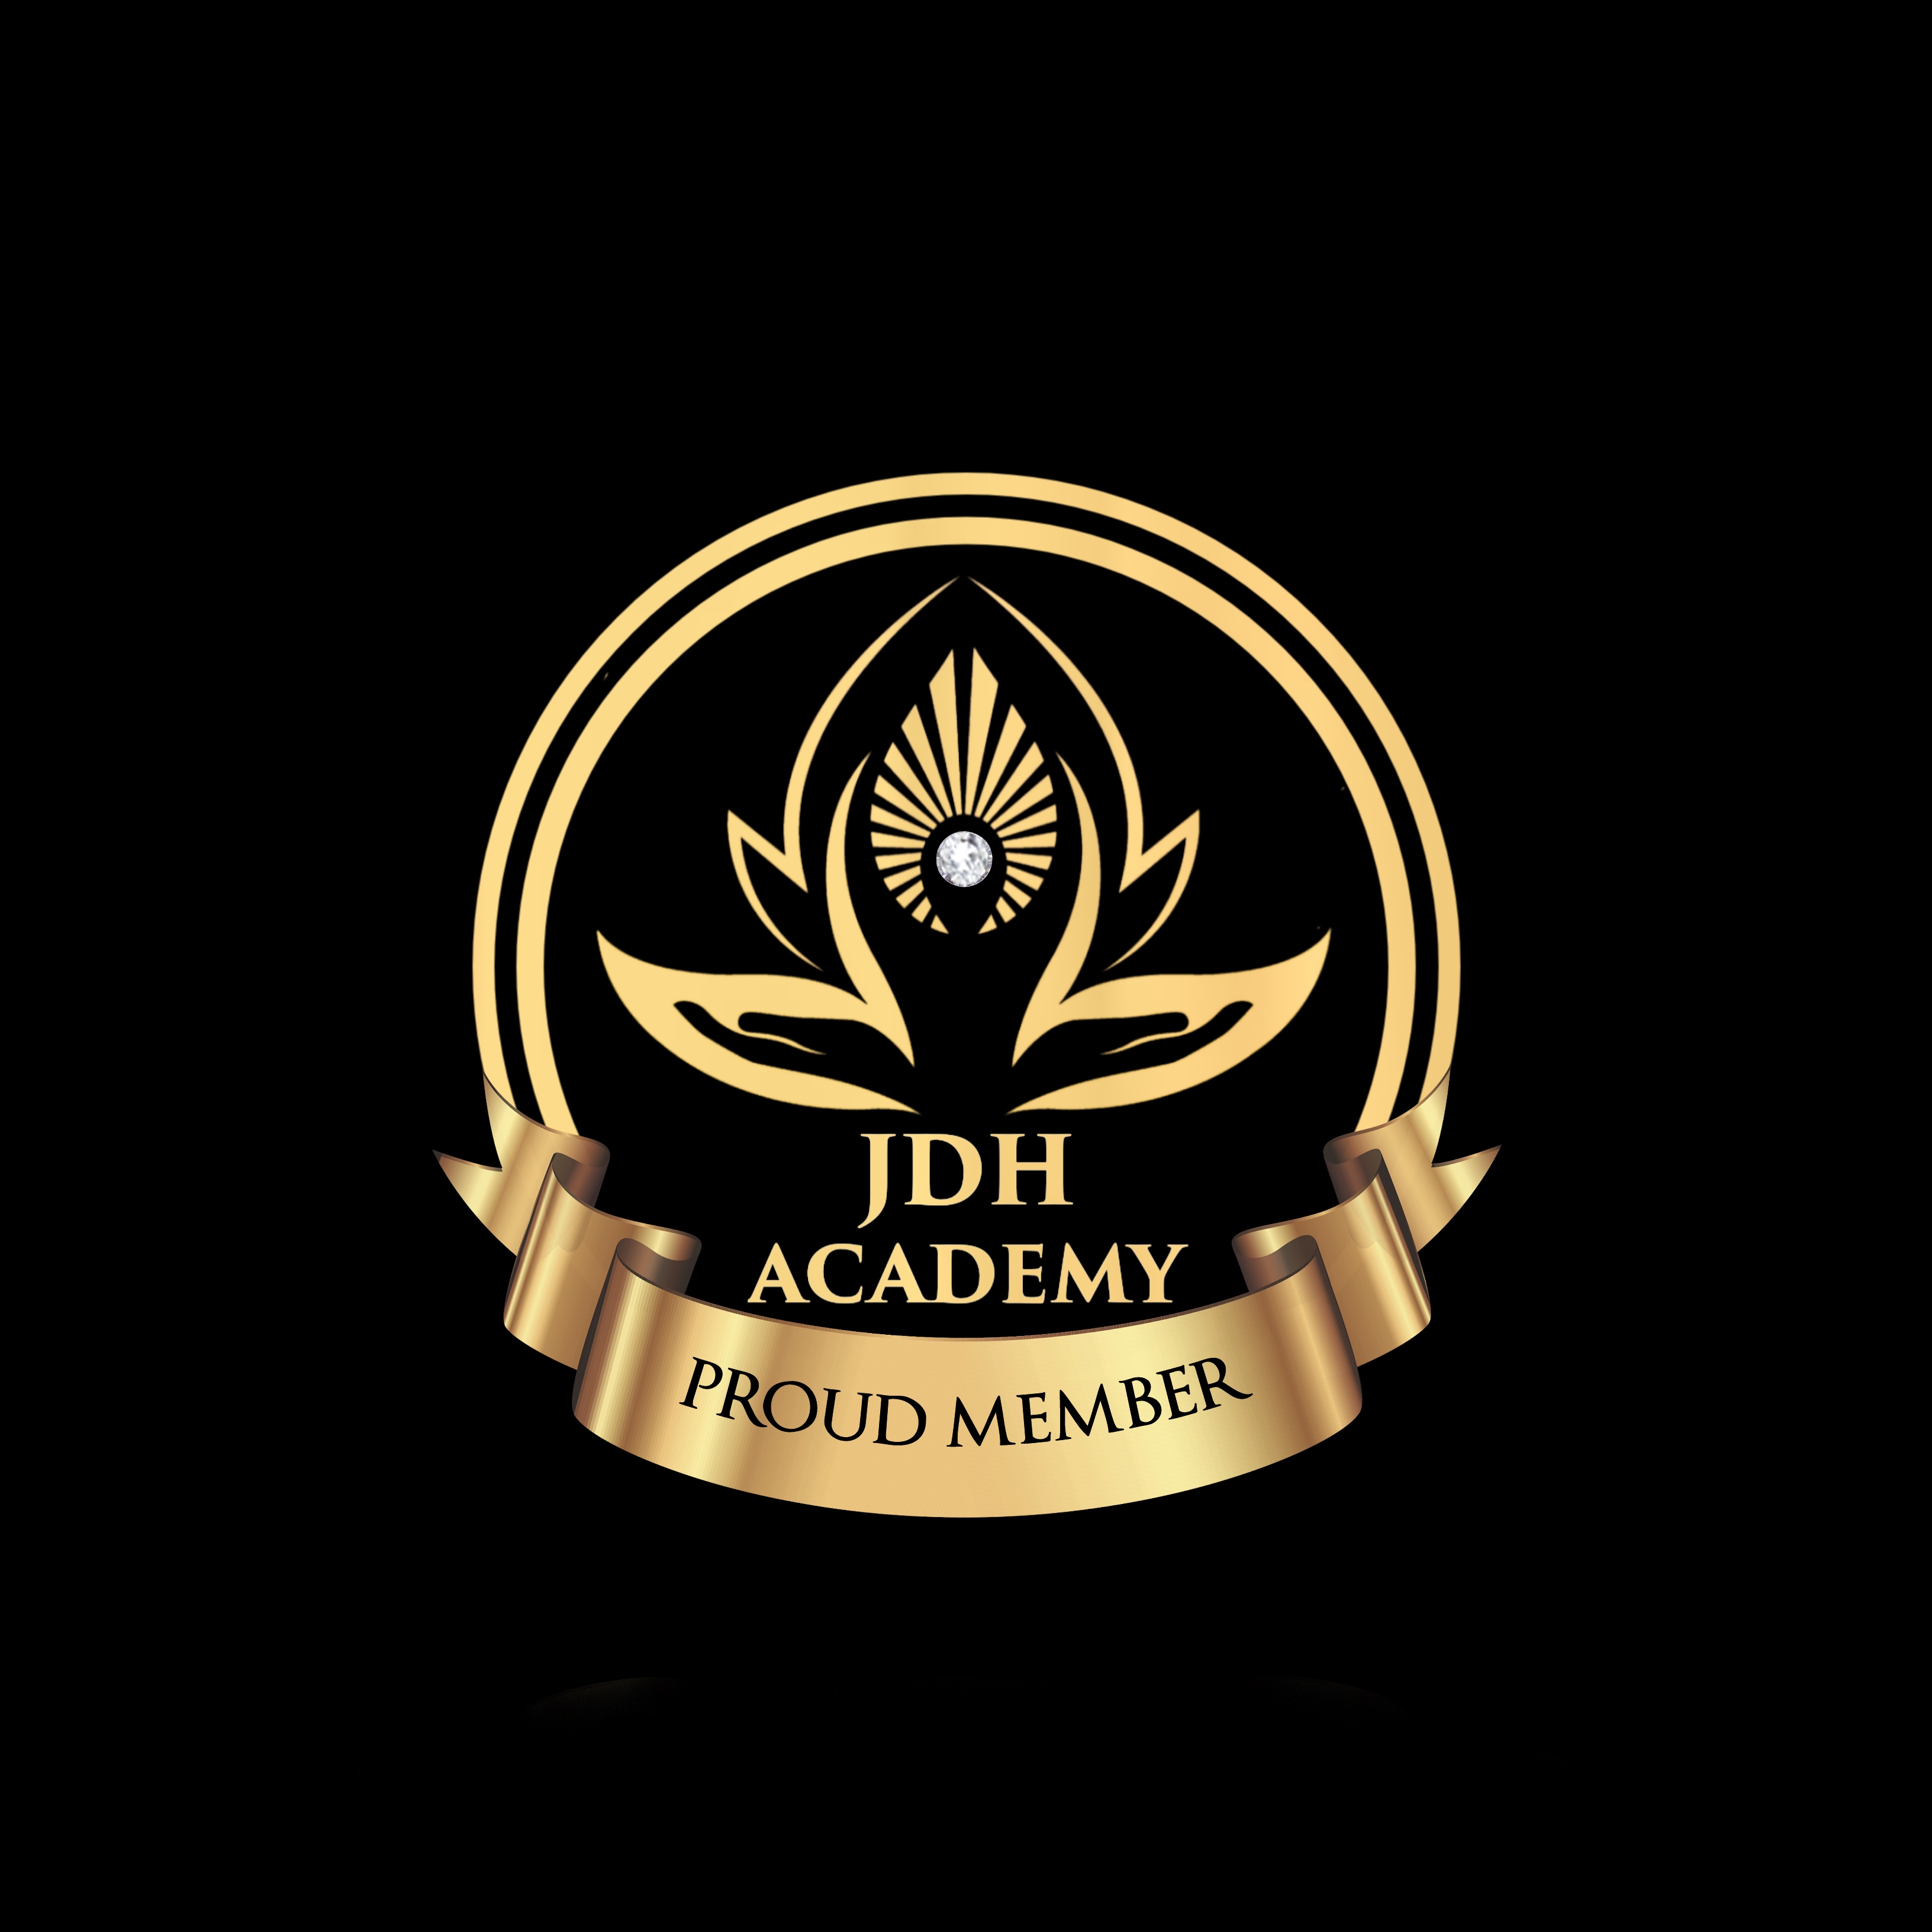 JDH Academy Membership